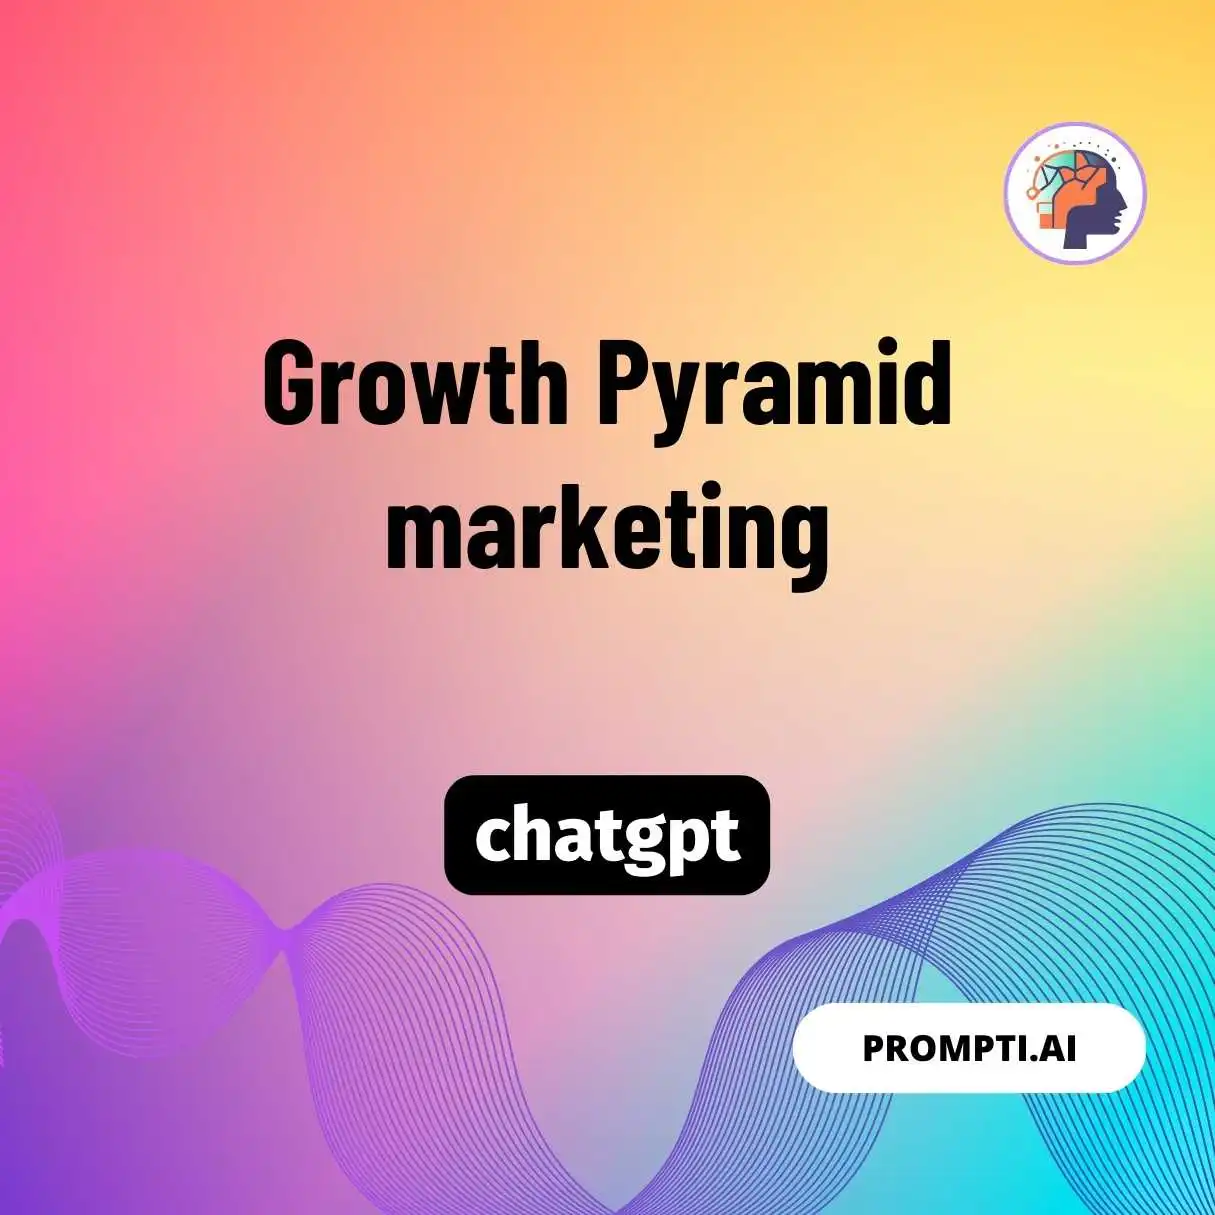 Growth Pyramid marketing